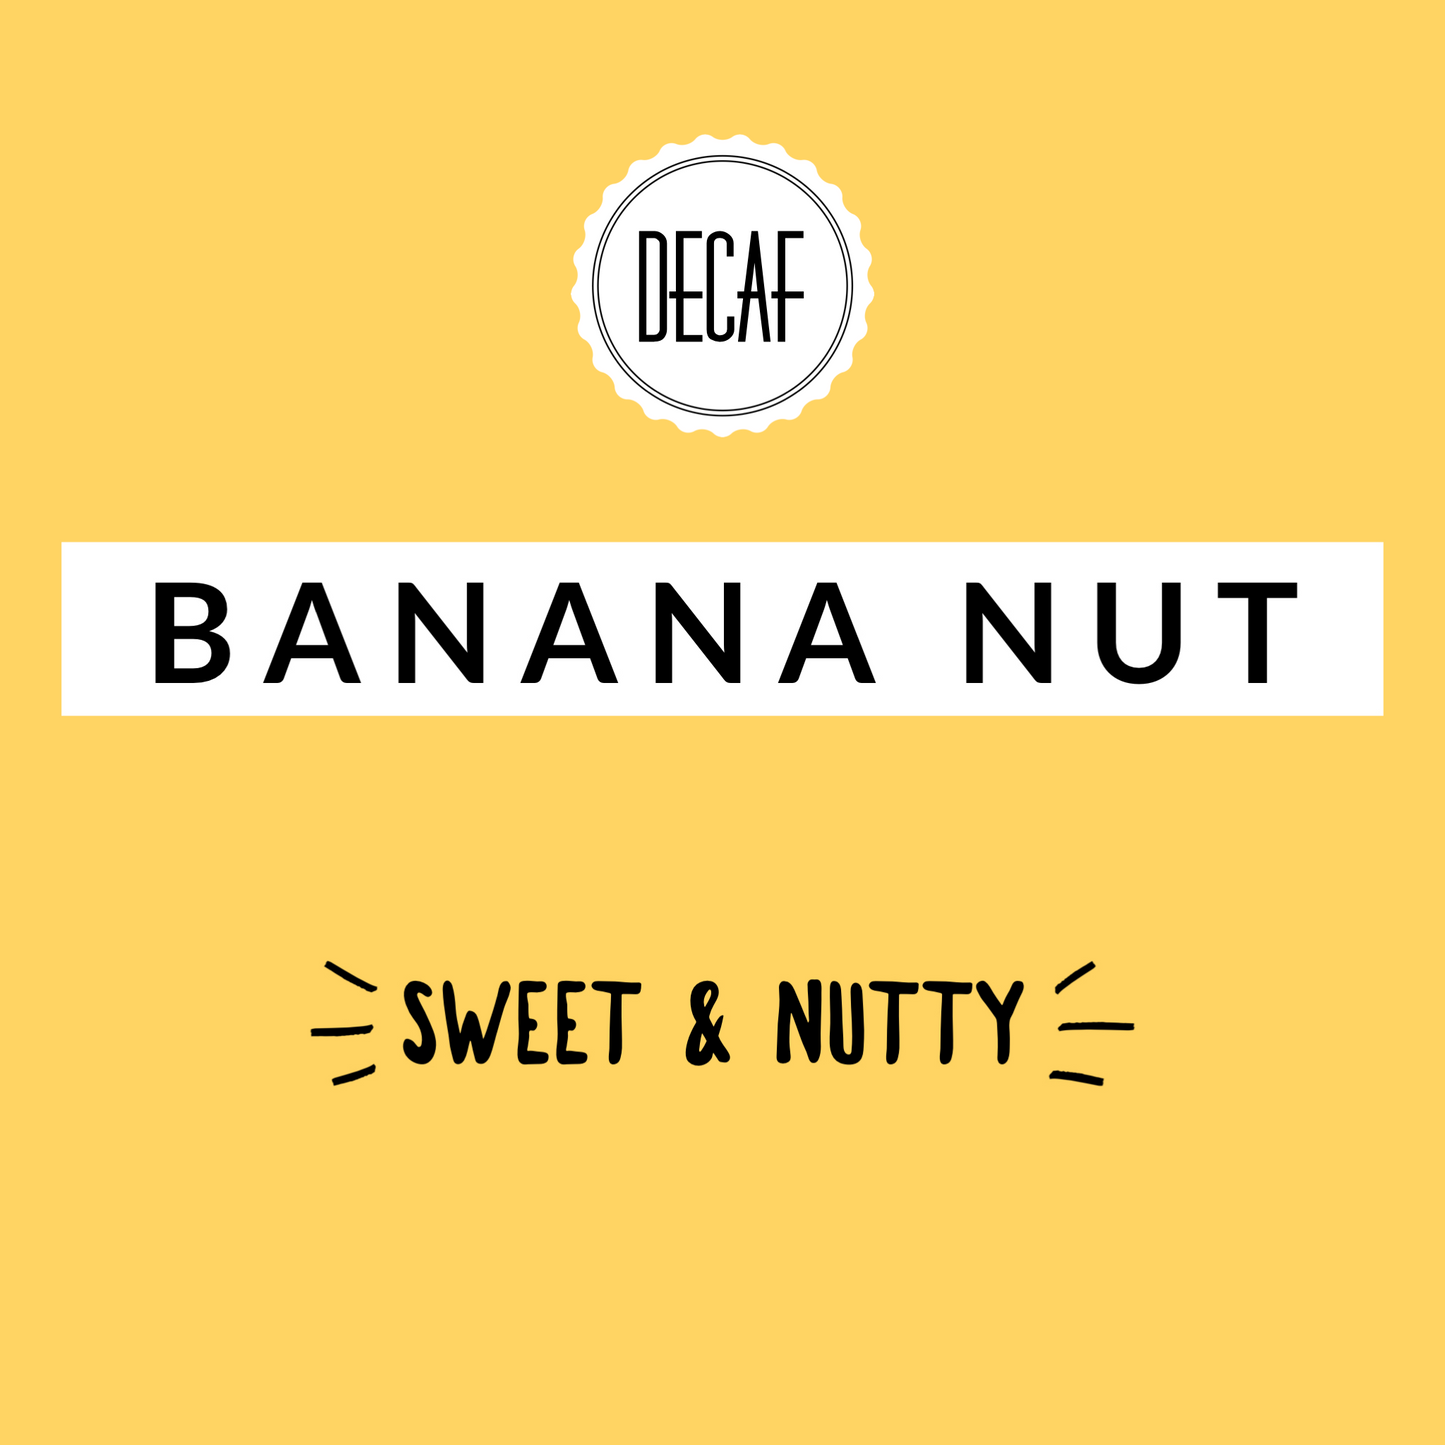 Banana Nut Decaf